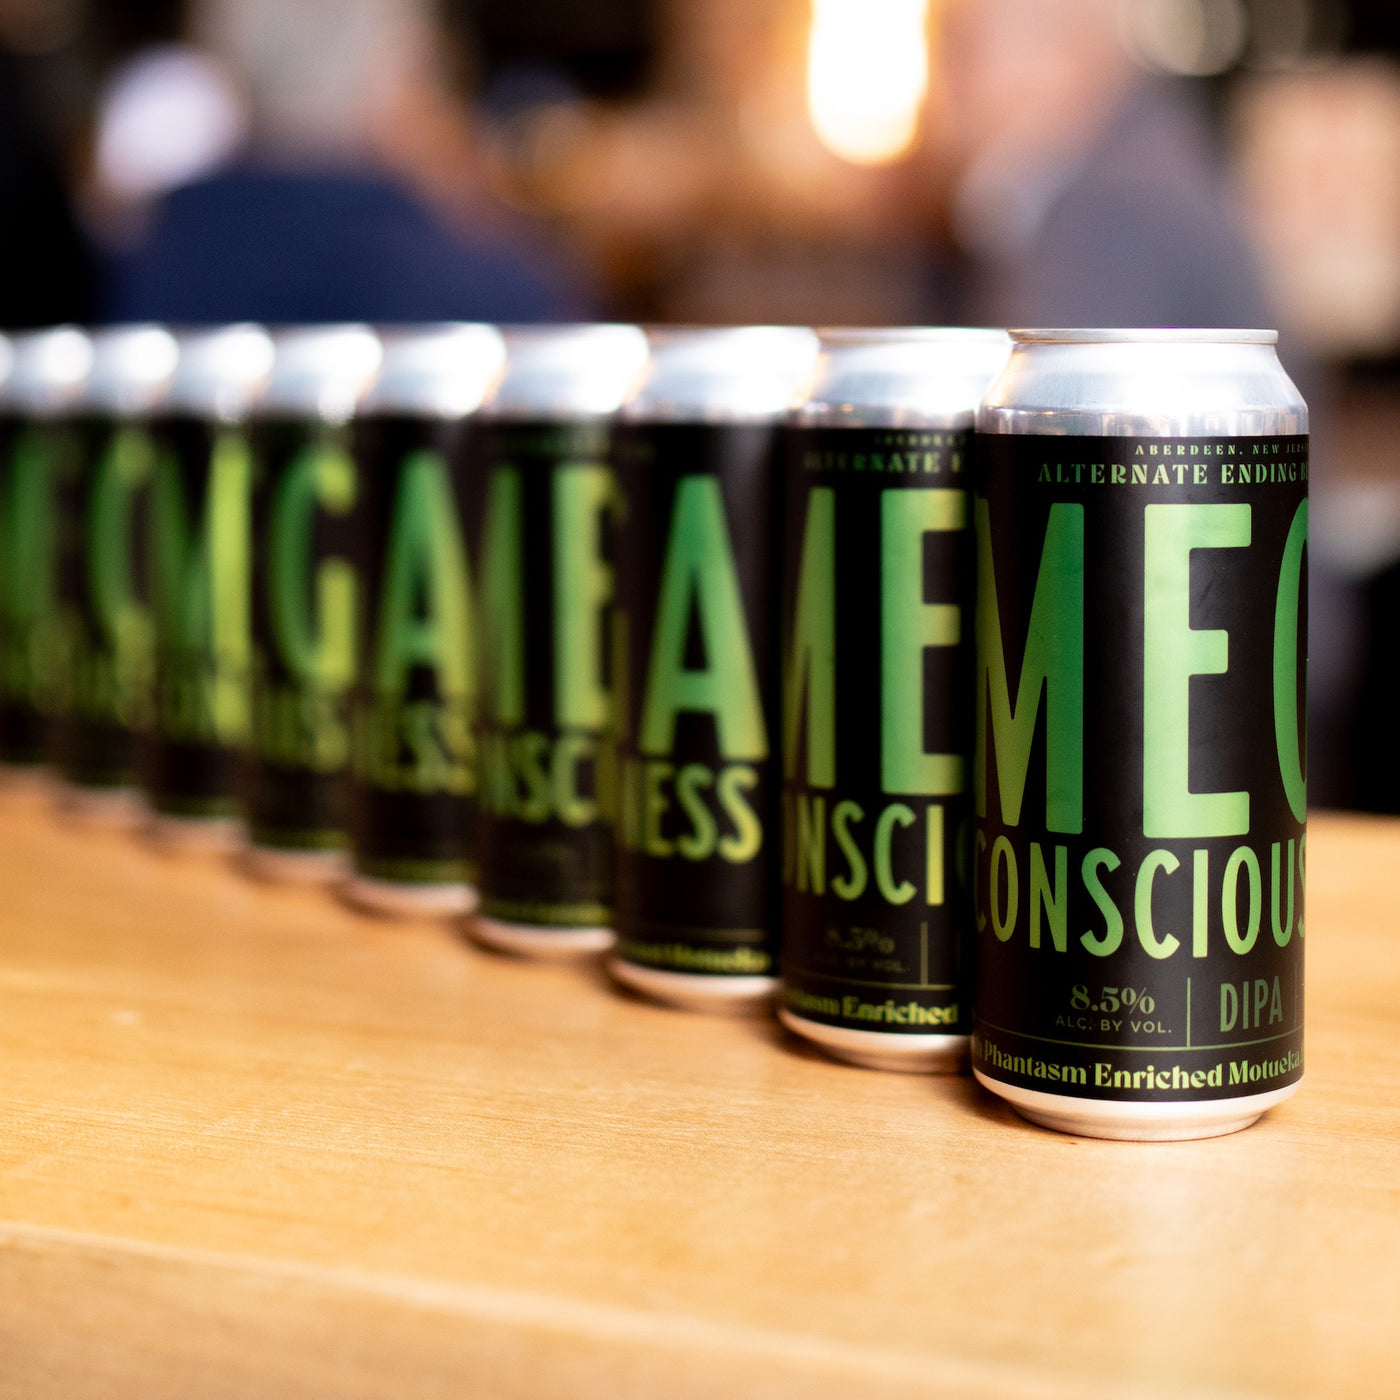 Alternate Ending Beer Co. Mega Consciousness DIPA 8.5%